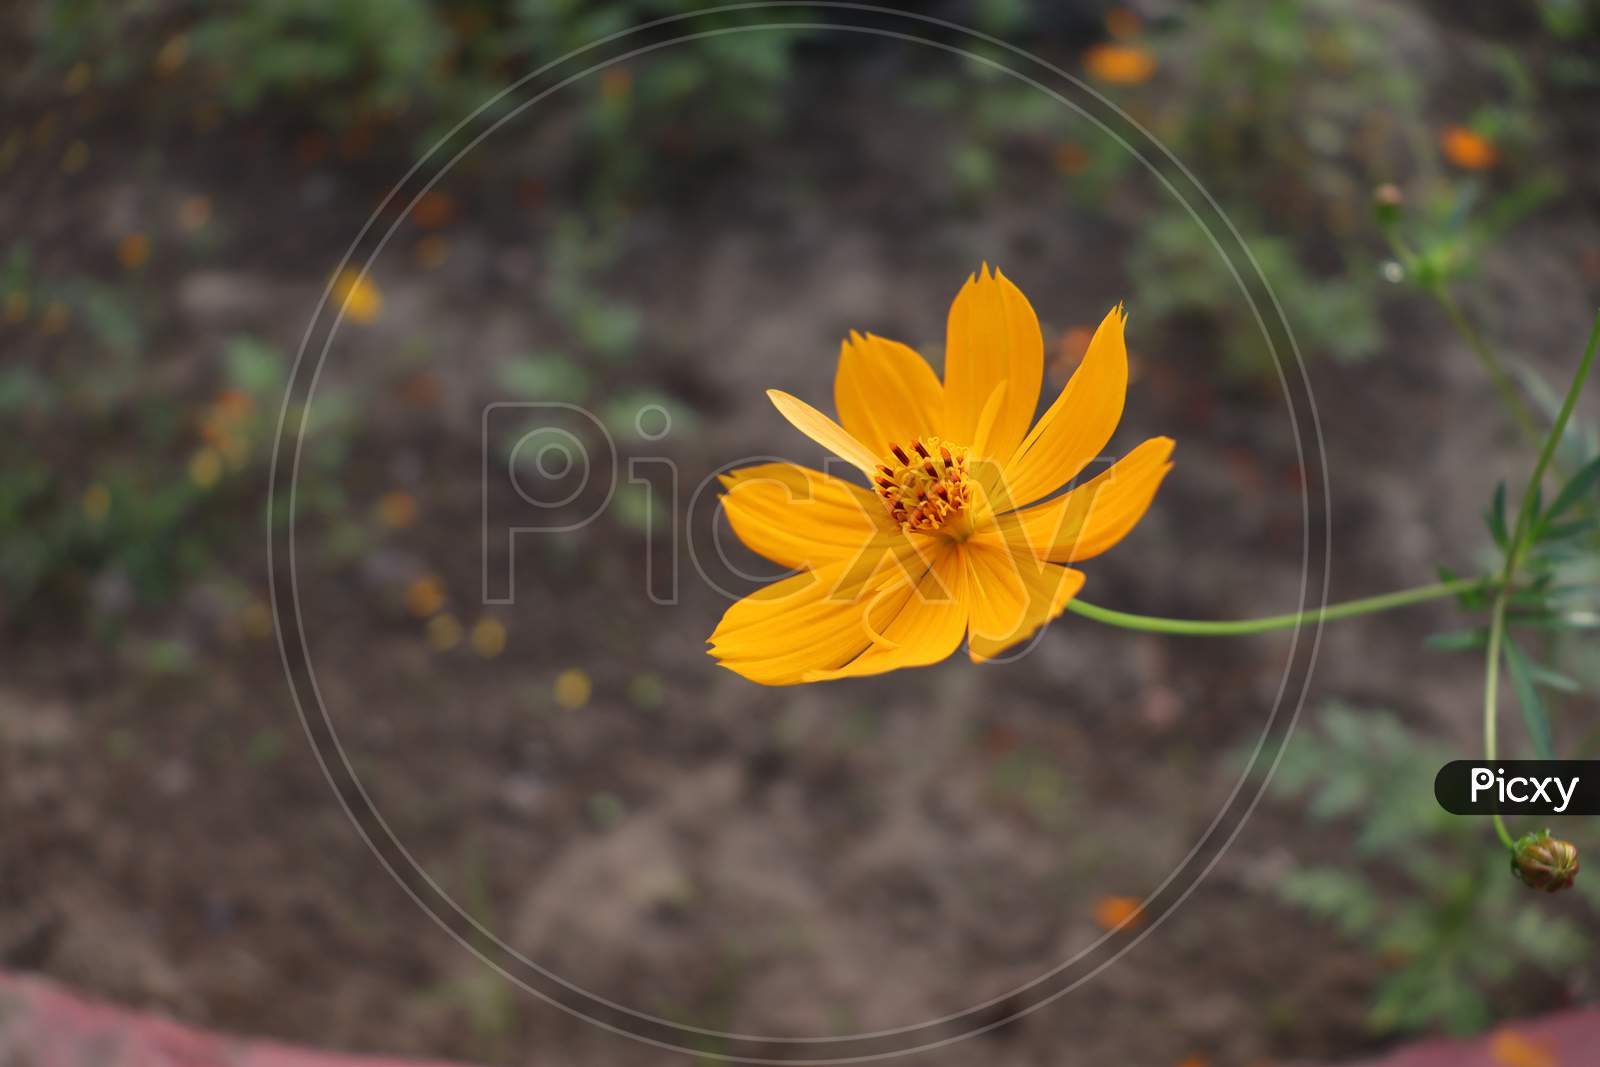 Yellow Daisy flower of Assam, Stock image